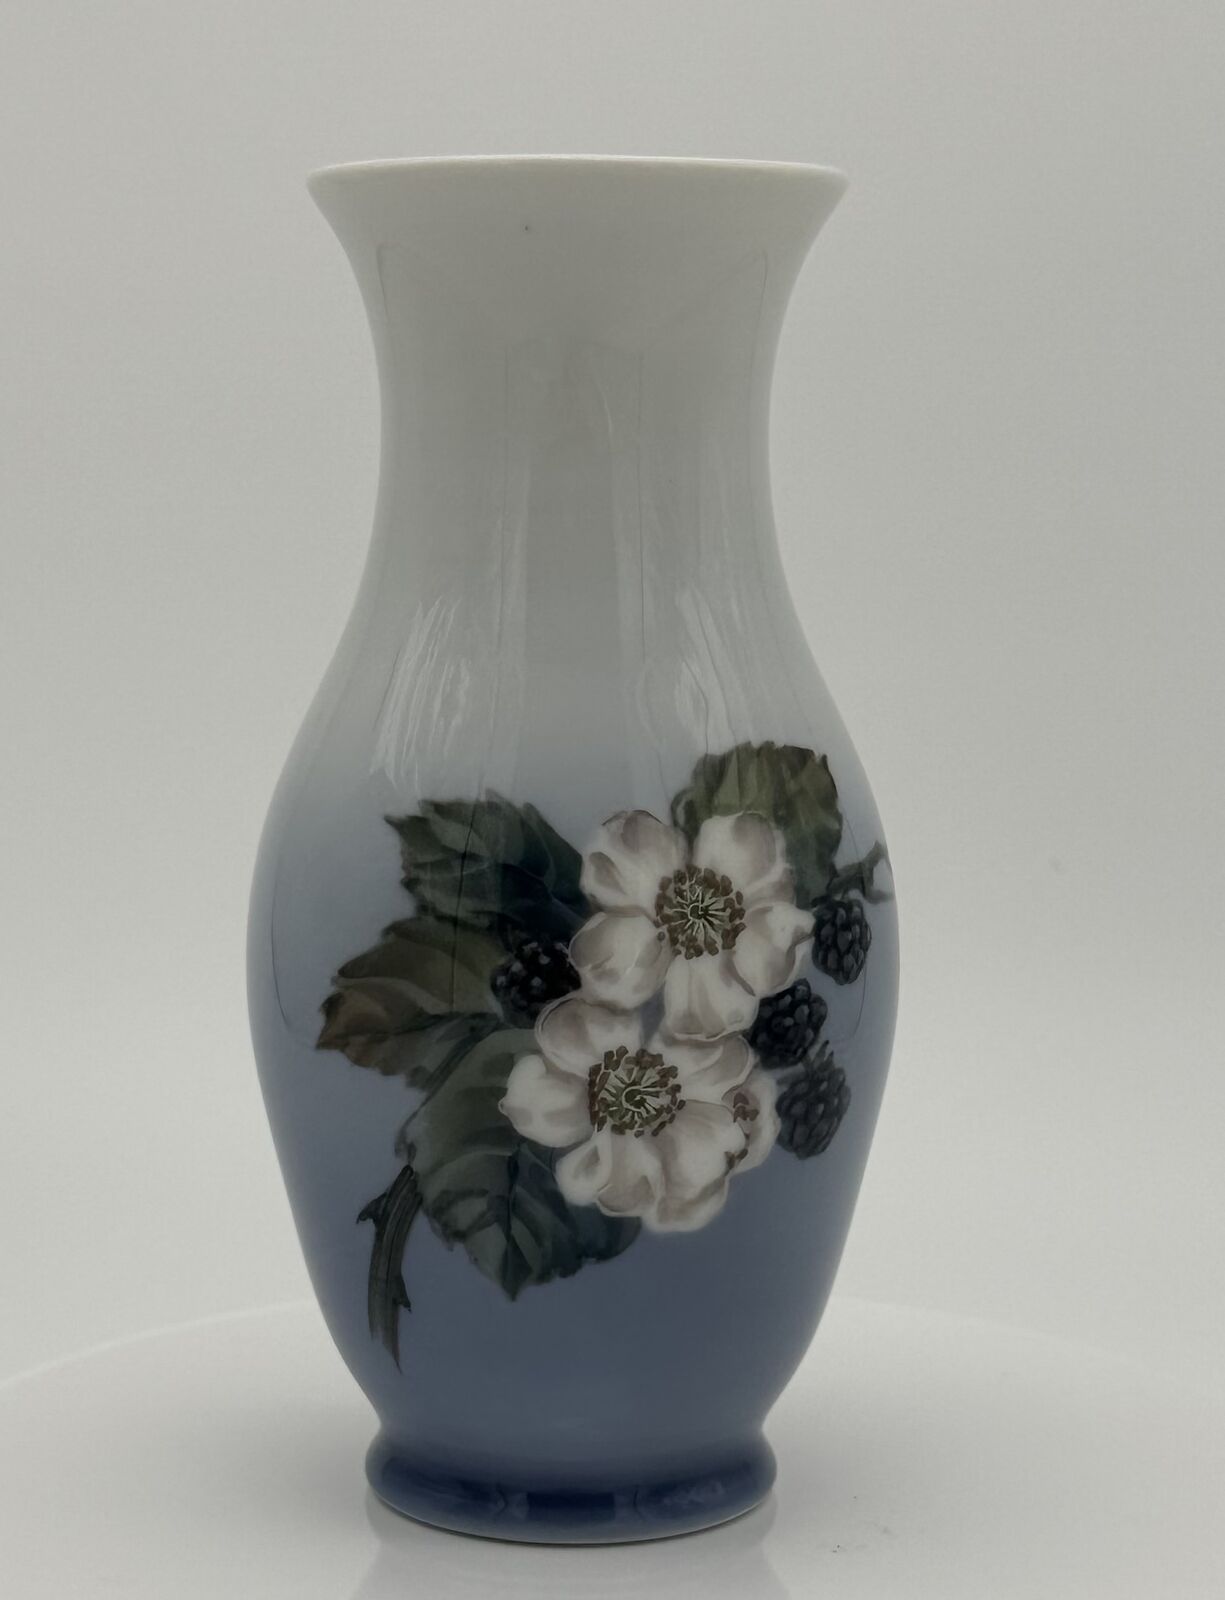 Vintage Royal Copenhagen Blue & White Hand-Painted Vase with Floral Design